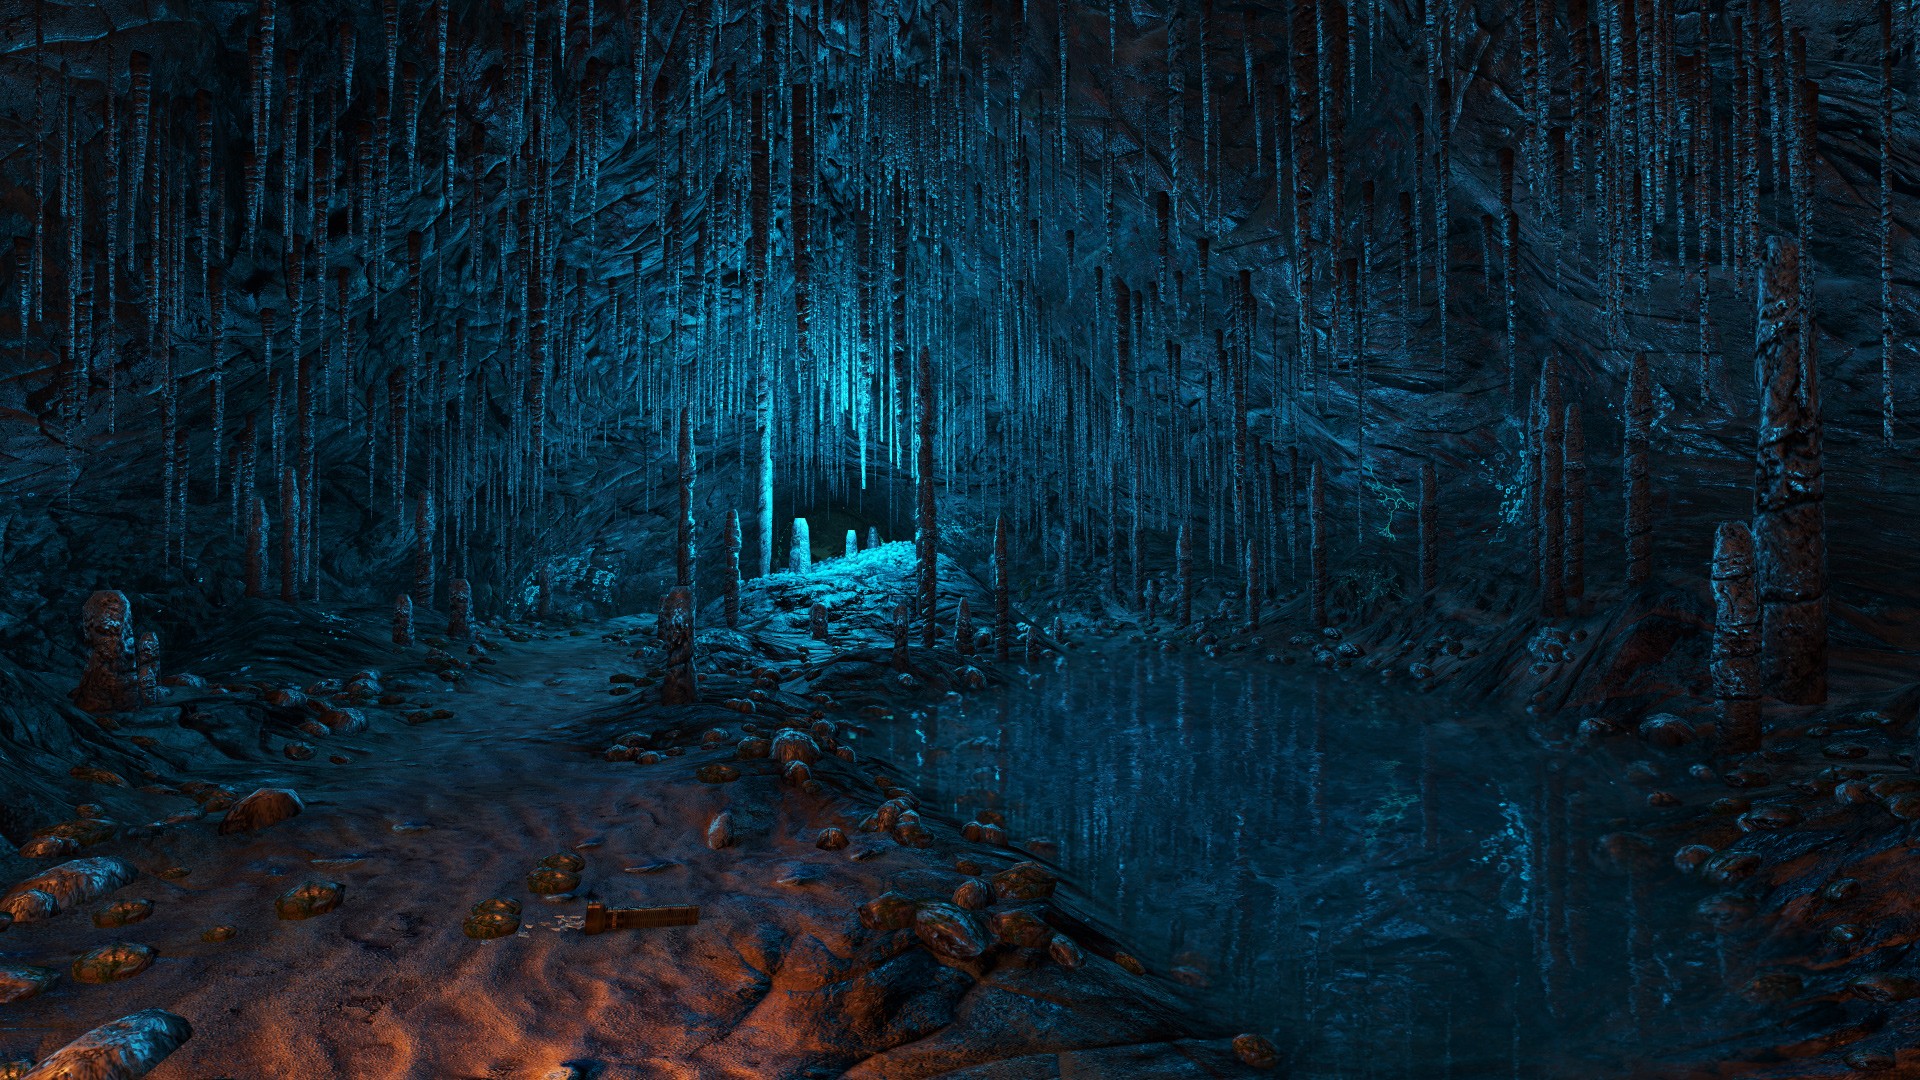 Cave Stalactites Stalagmites Blue Hd Wallpaper Nature And Landscape